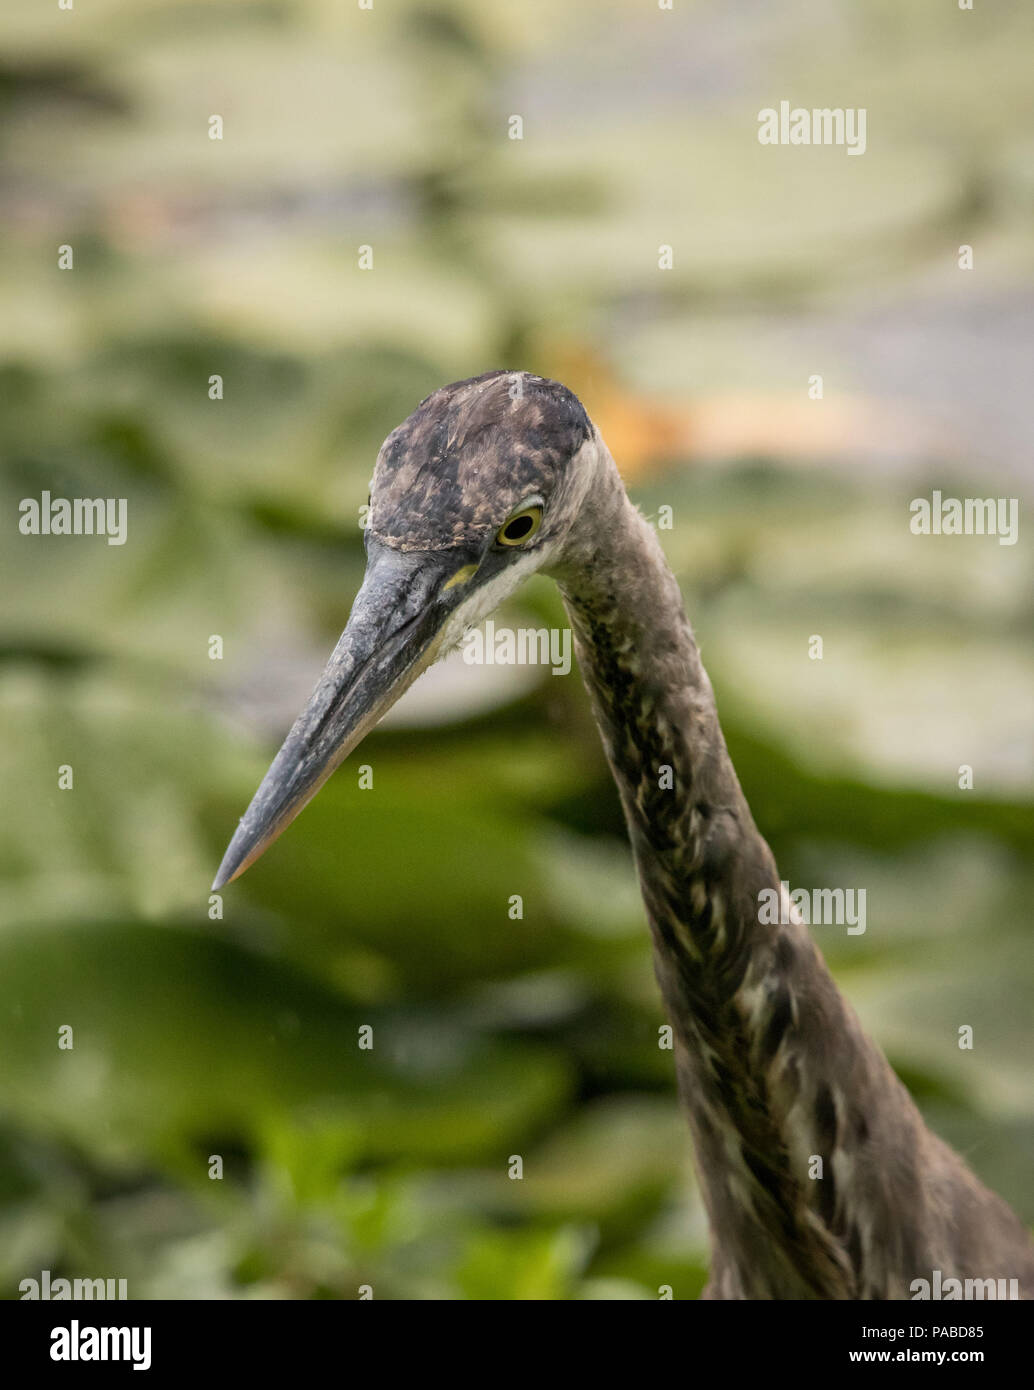 Closeup of a gray heron Stock Photo